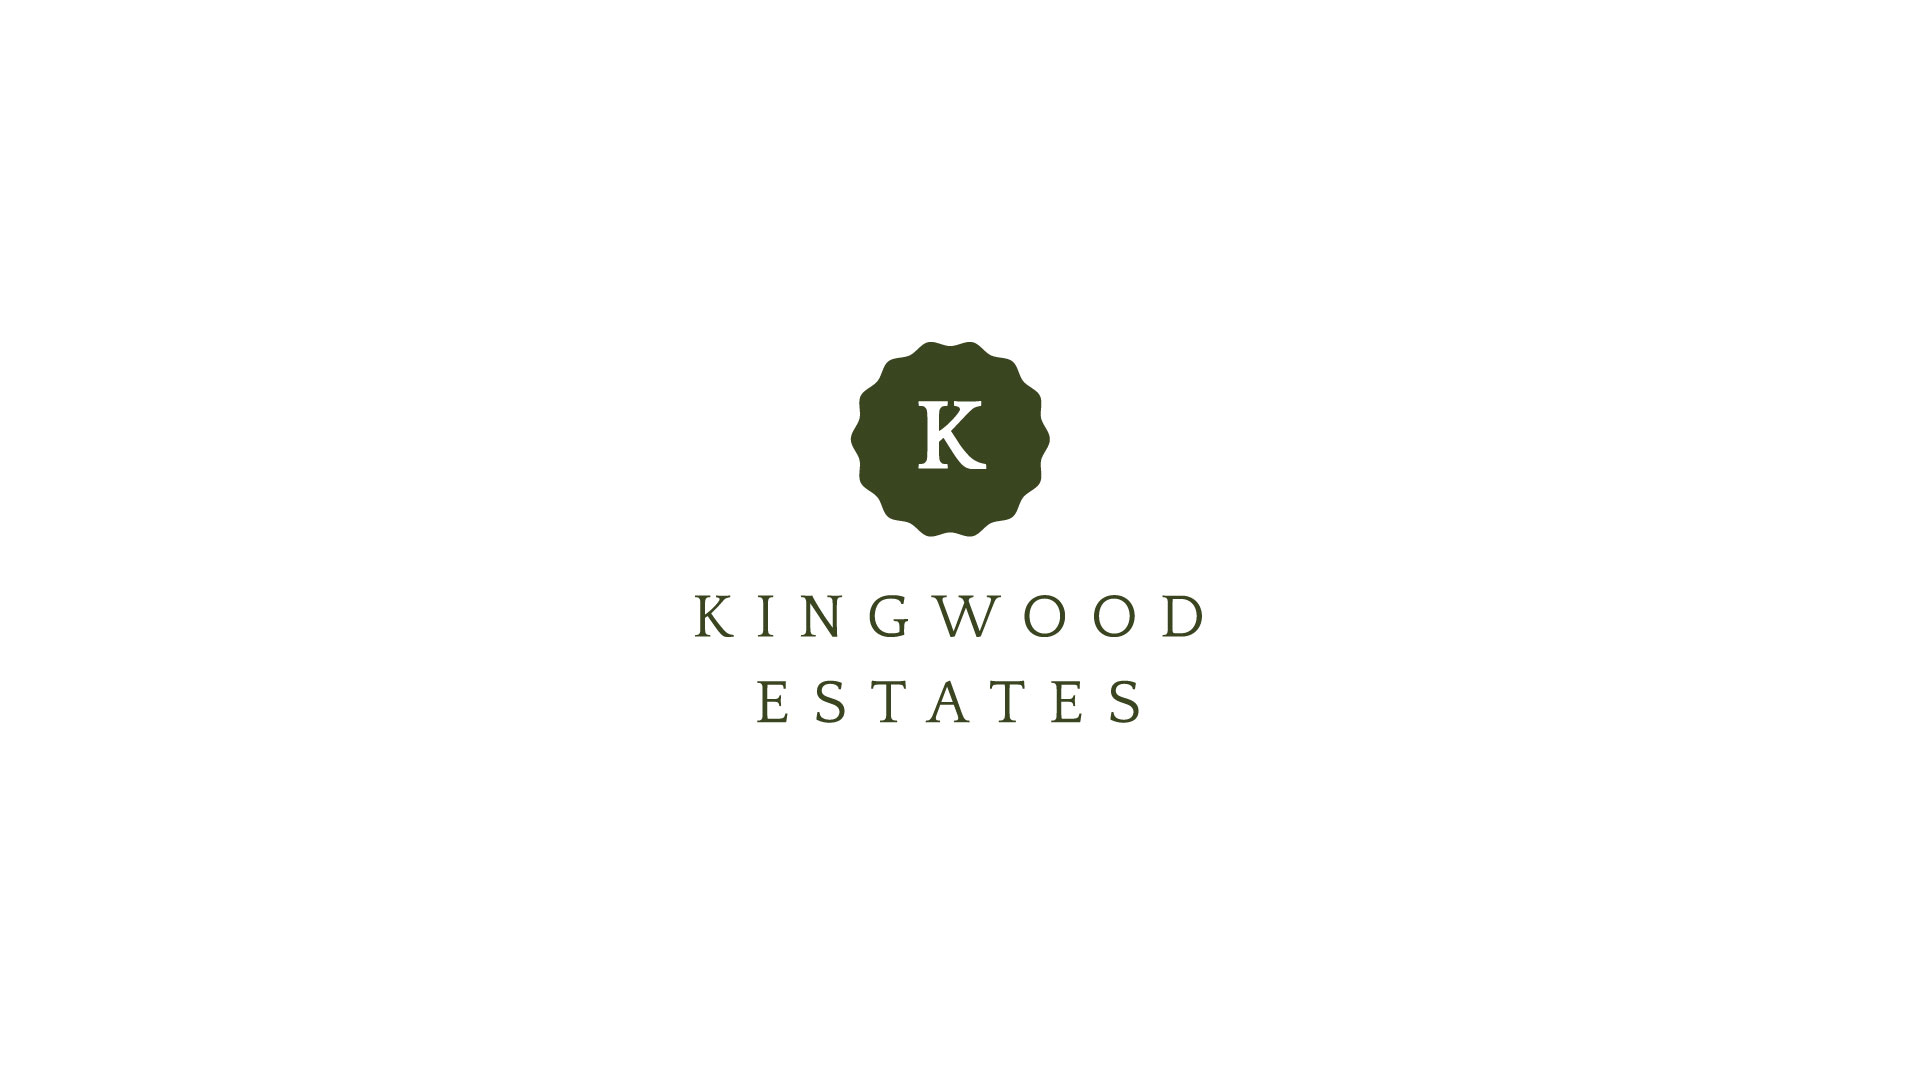 Kingwood Estates